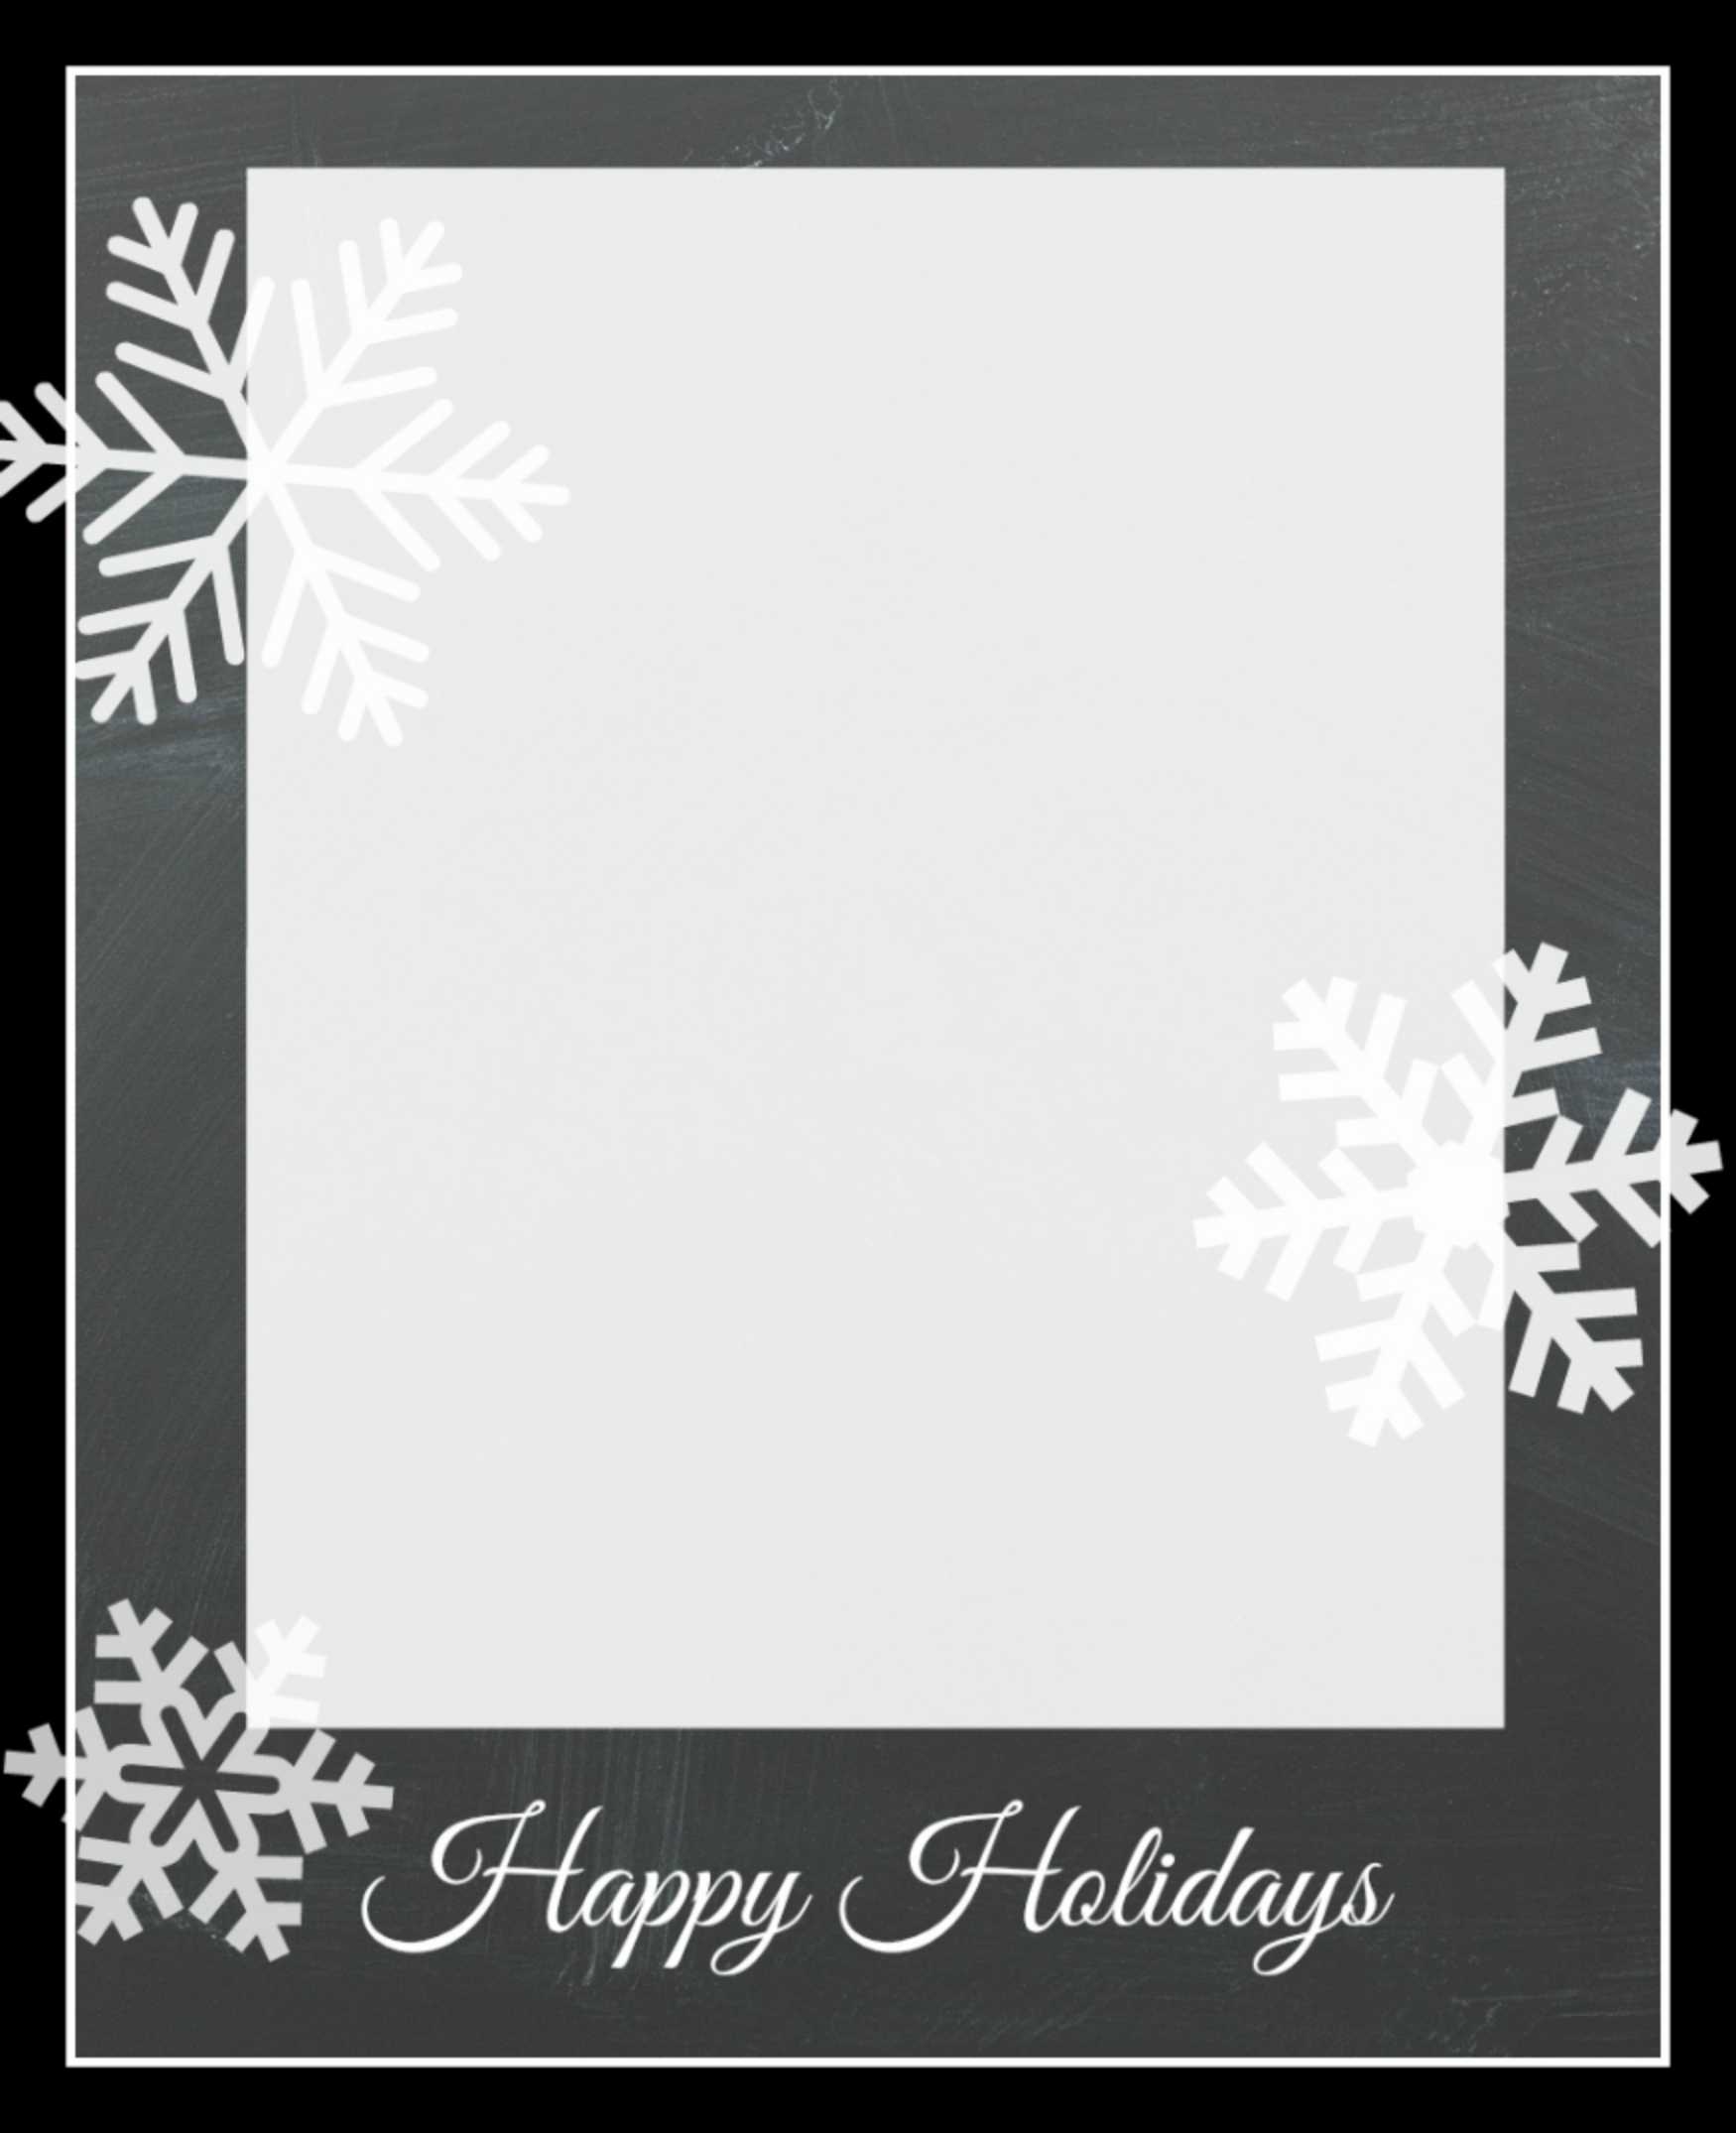 Happy Holidays Card Templates – Dalep.midnightpig.co In Happy Holidays Card Template